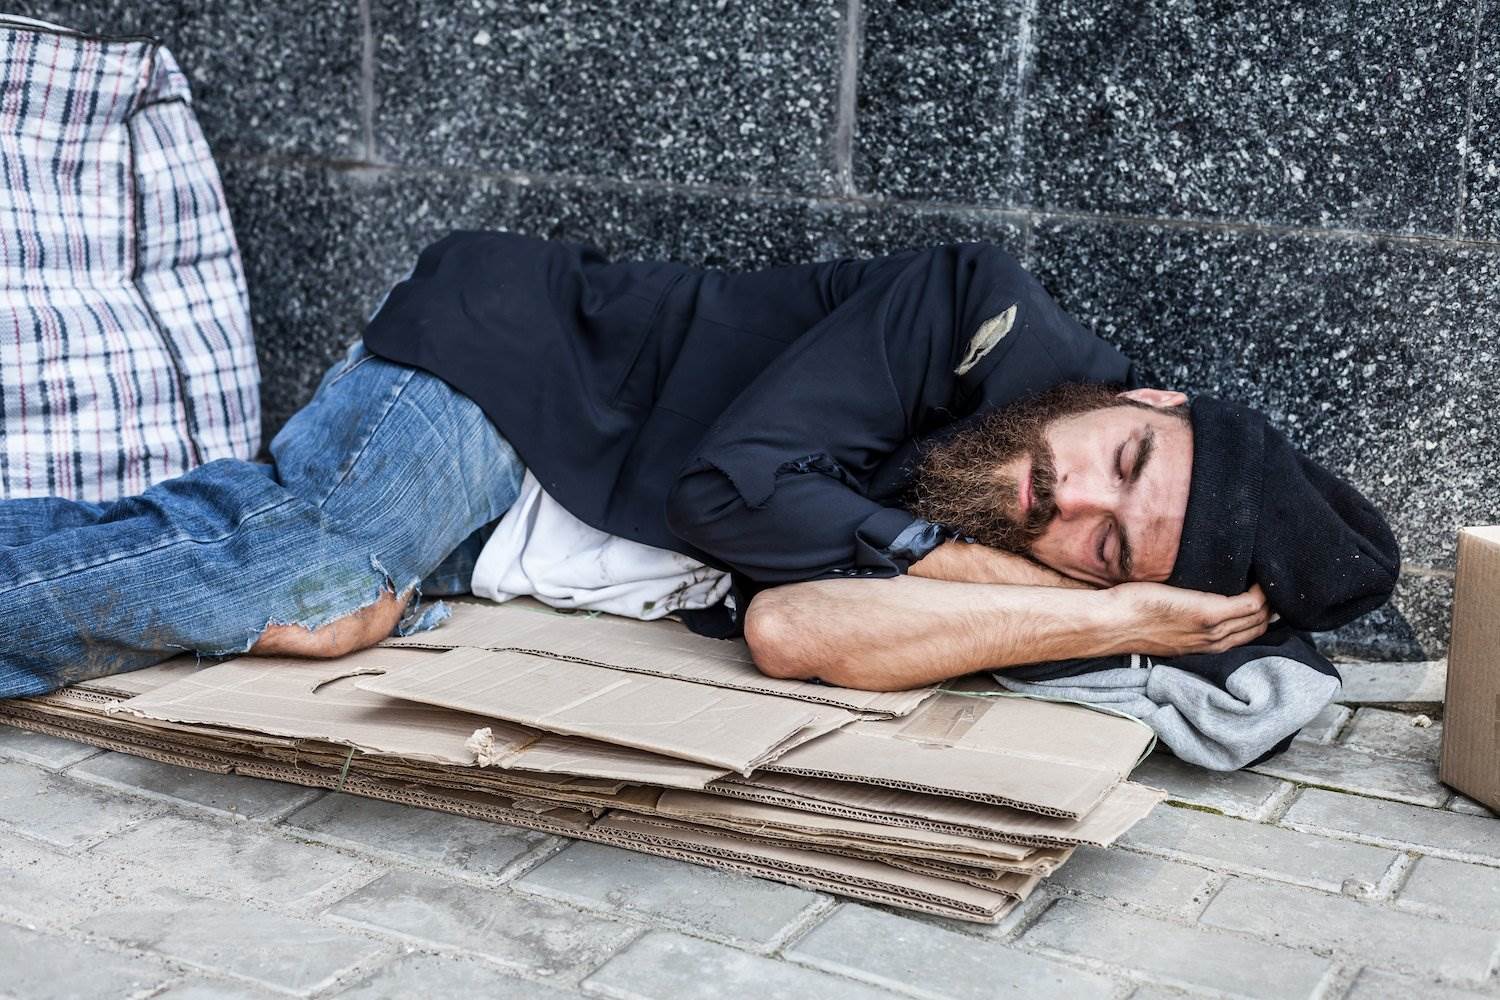 Homeless man violating the new Las Vegas encampment ordinance.